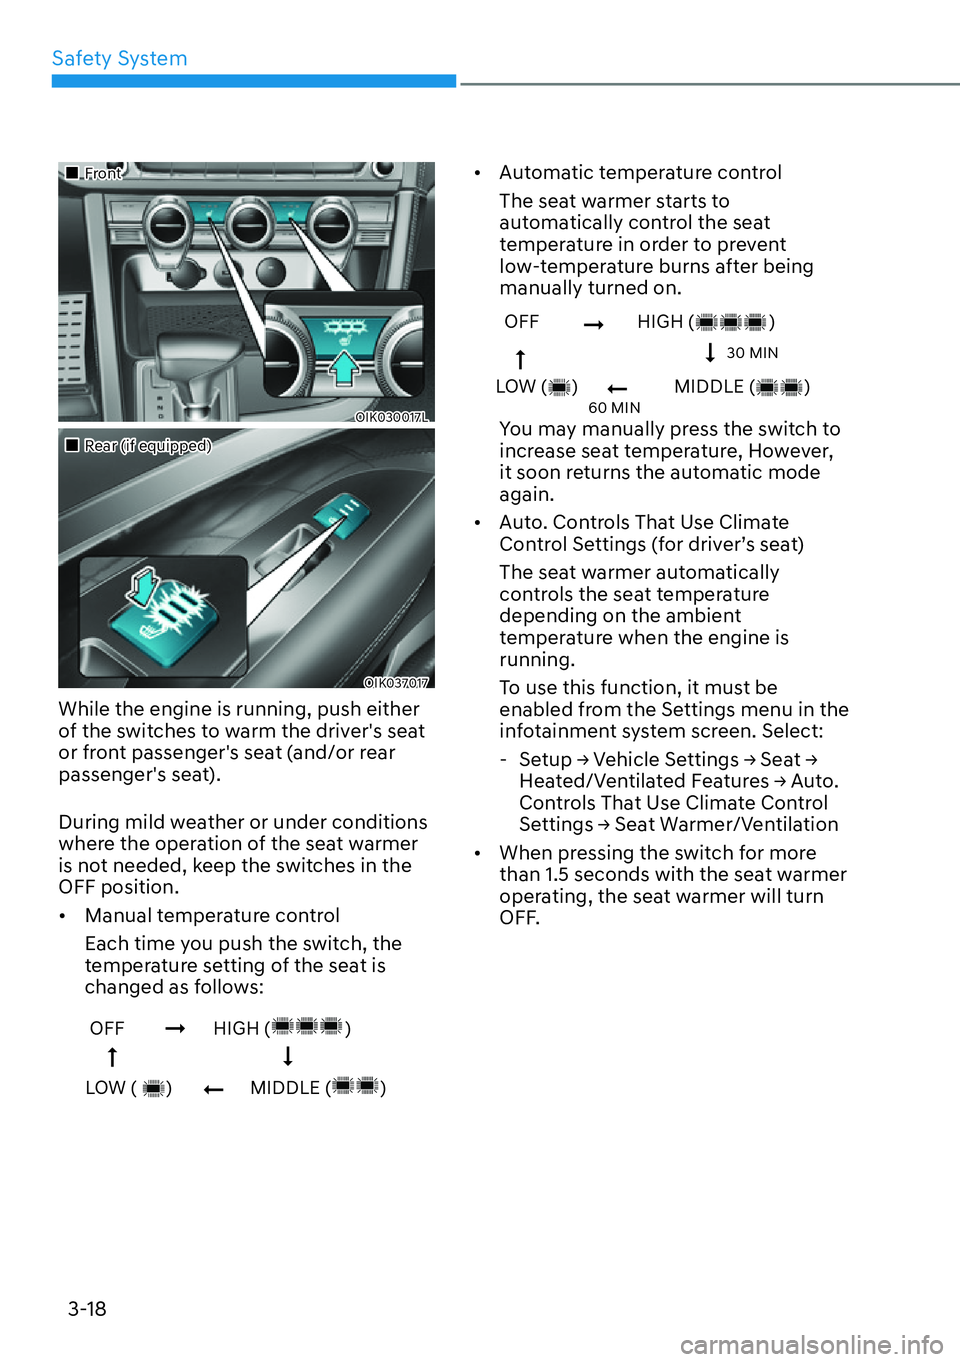 HYUNDAI GENESIS G70 2022  Owners Manual Safety System
3-18
��„Front
OIK030017L
��„Rear (if equipped)
OIK037017
While the engine is running, push either 
of the switches to warm the drivers seat 
or front passengers seat (and/or rear